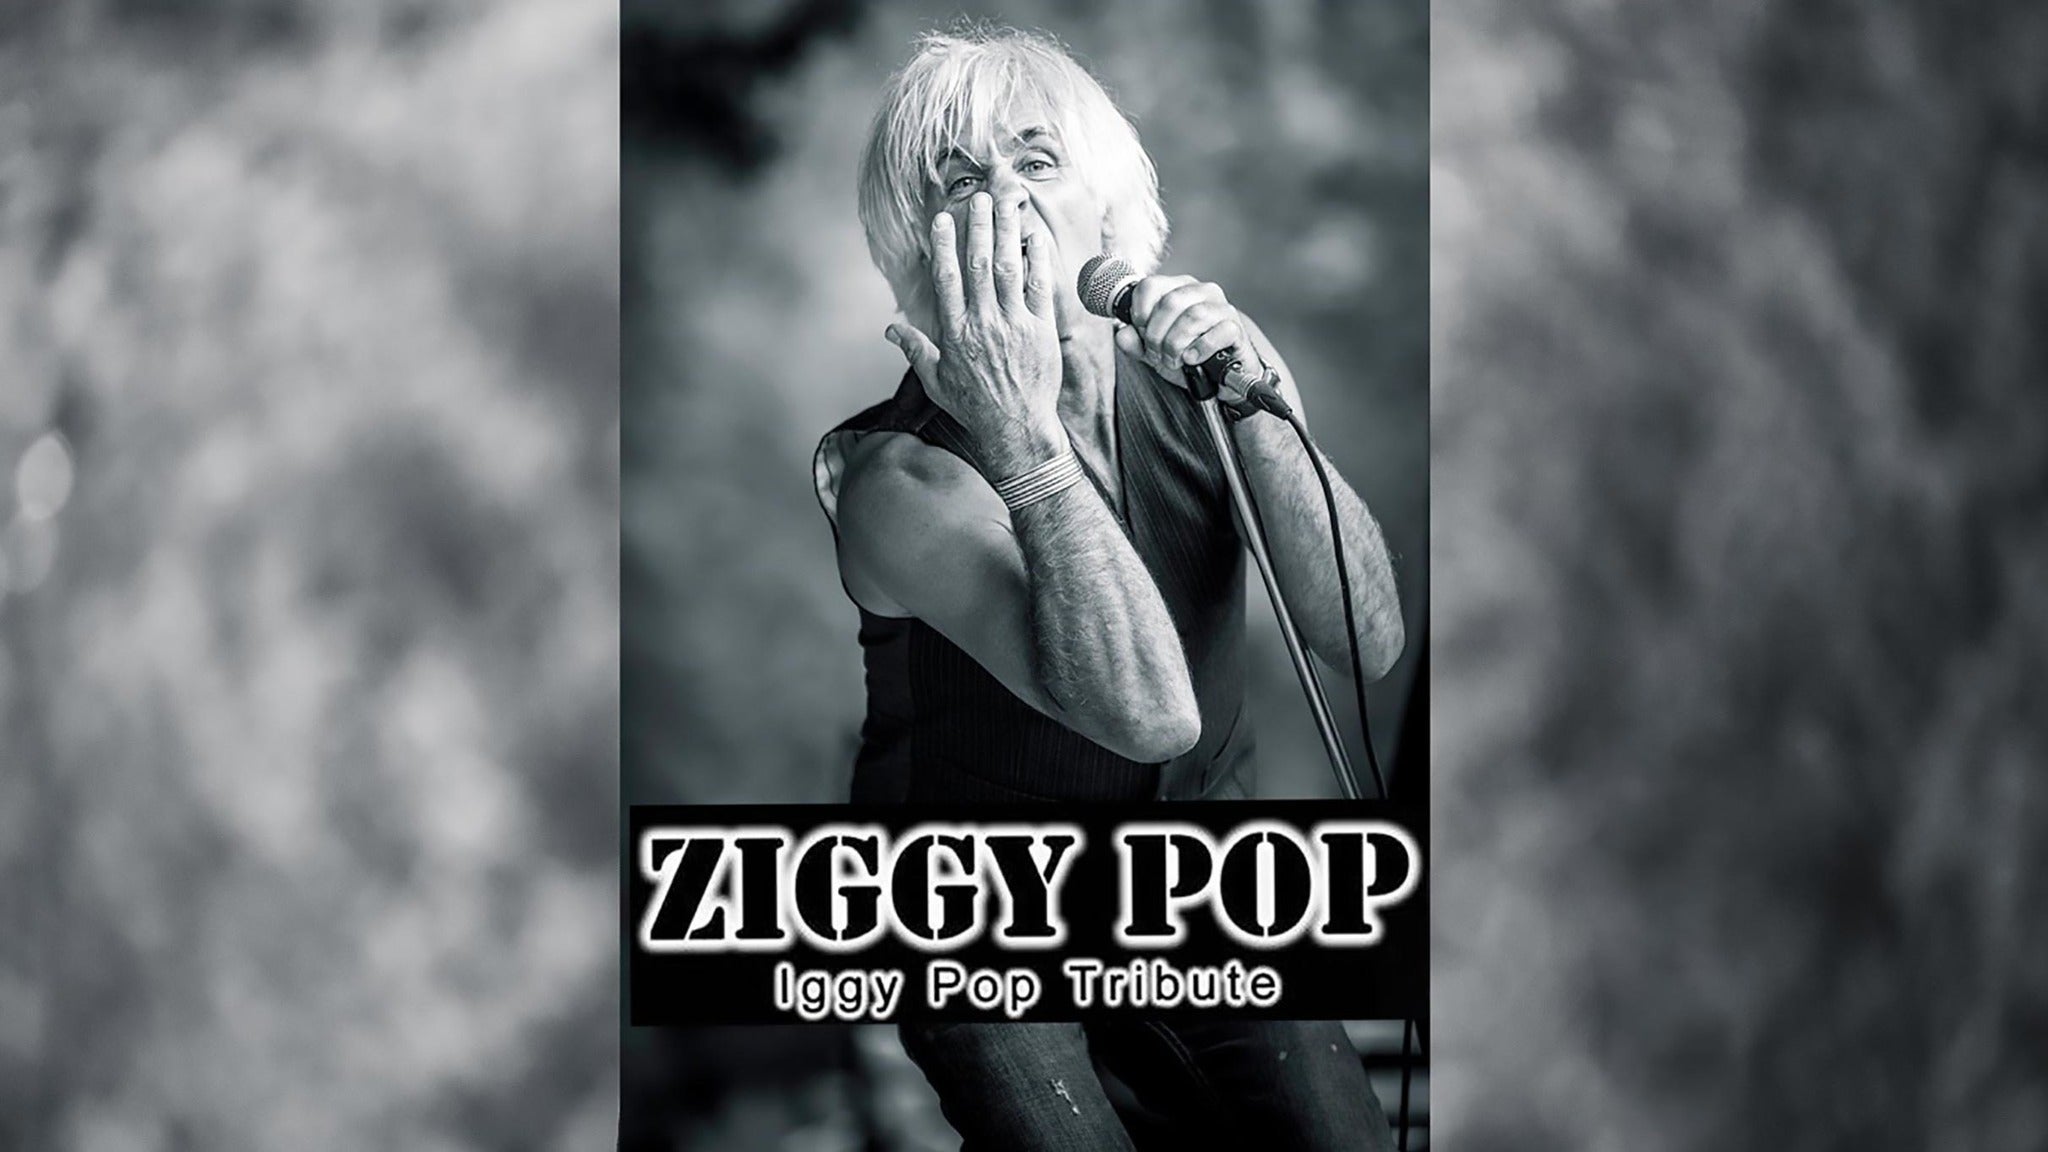 Ziggy Pop plays Iggy Pop